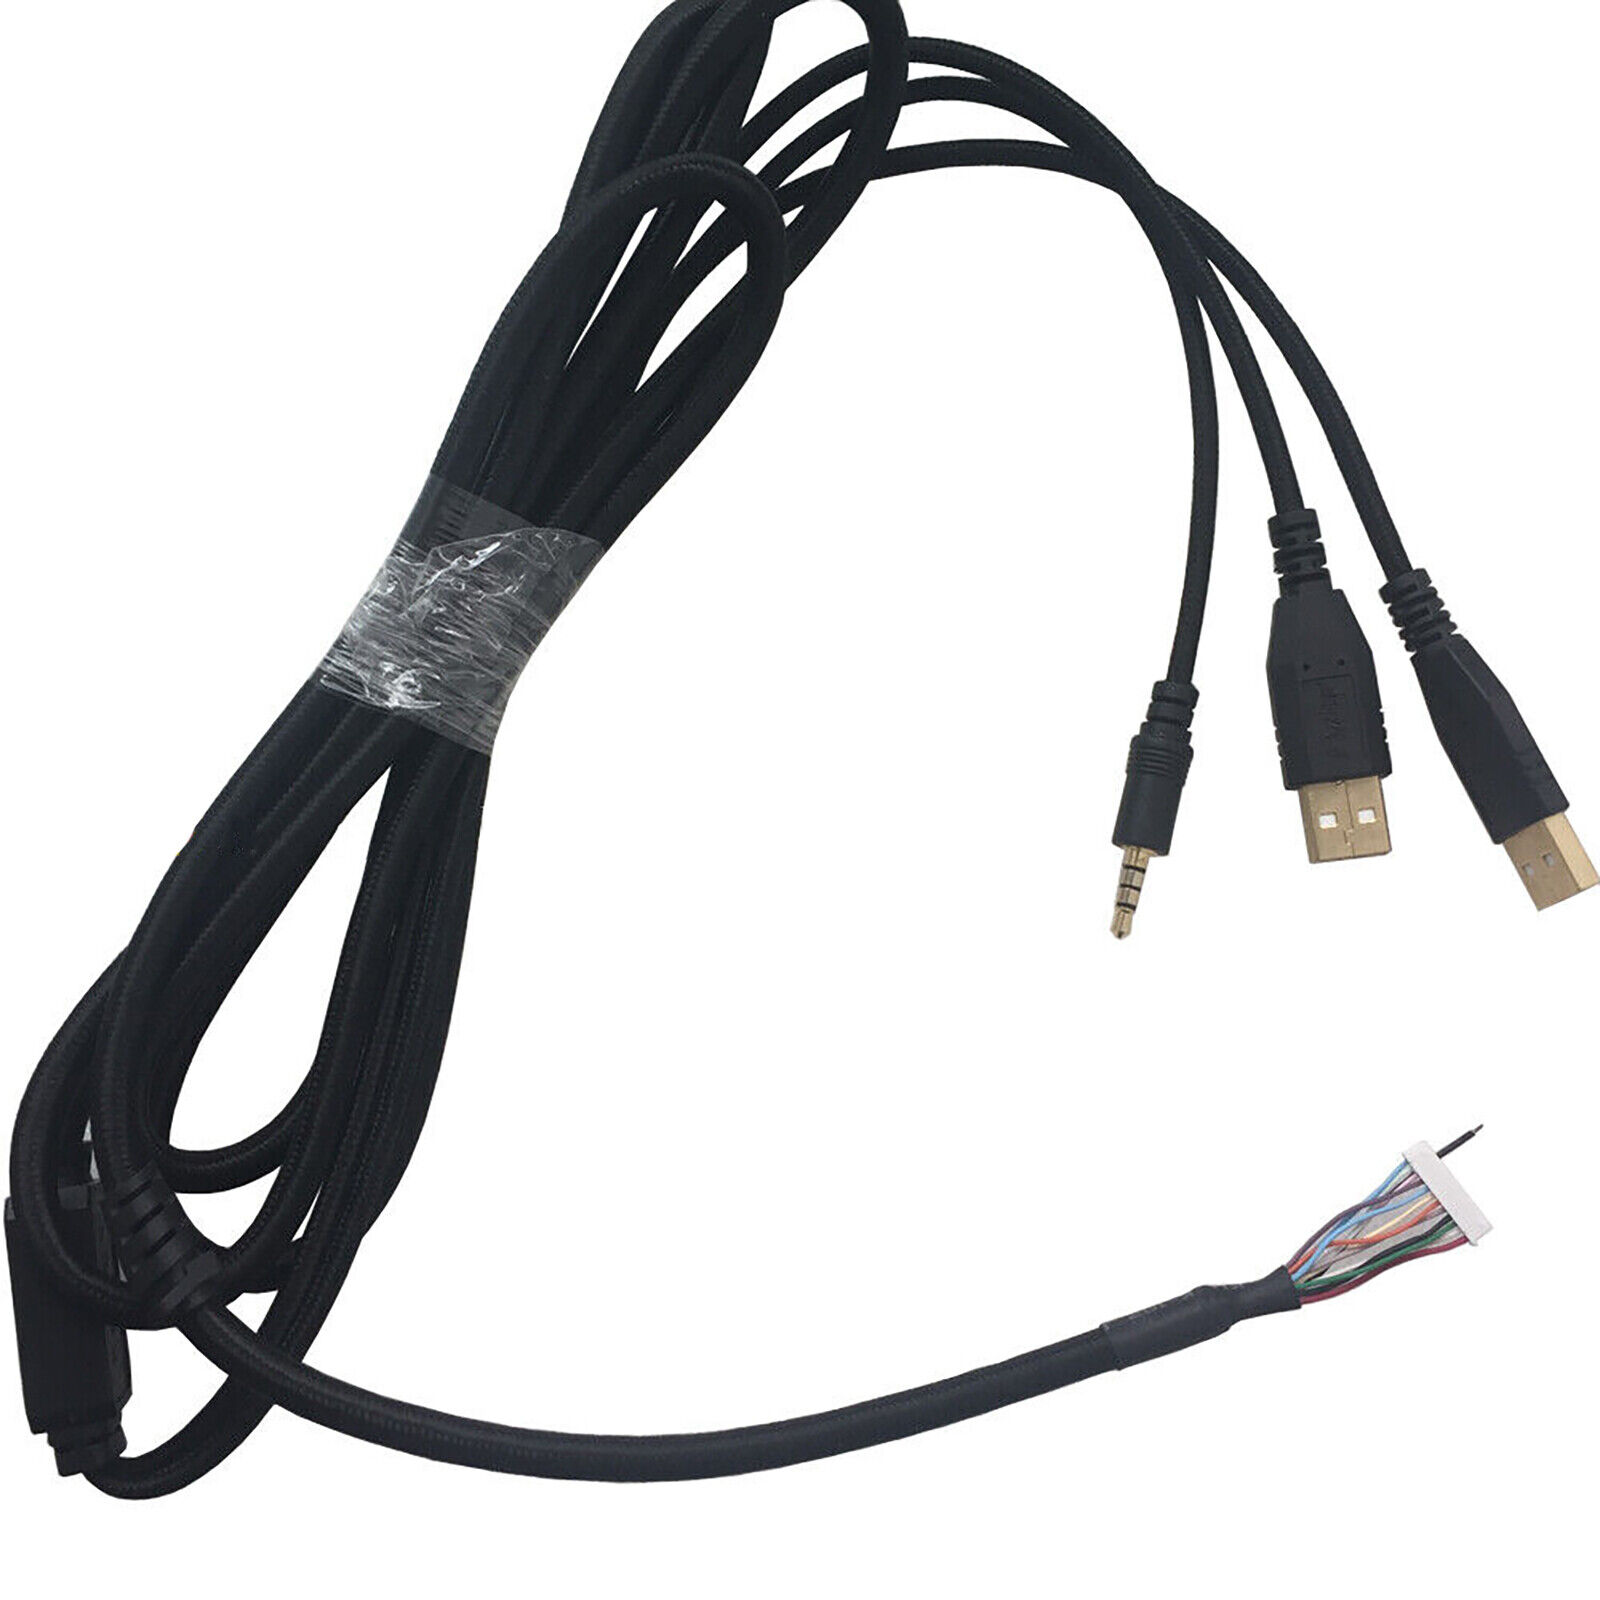 1.8m USB Keyboard Cable Cord For Razer BlackWidow Ultimate Edition 2016 Keyboard